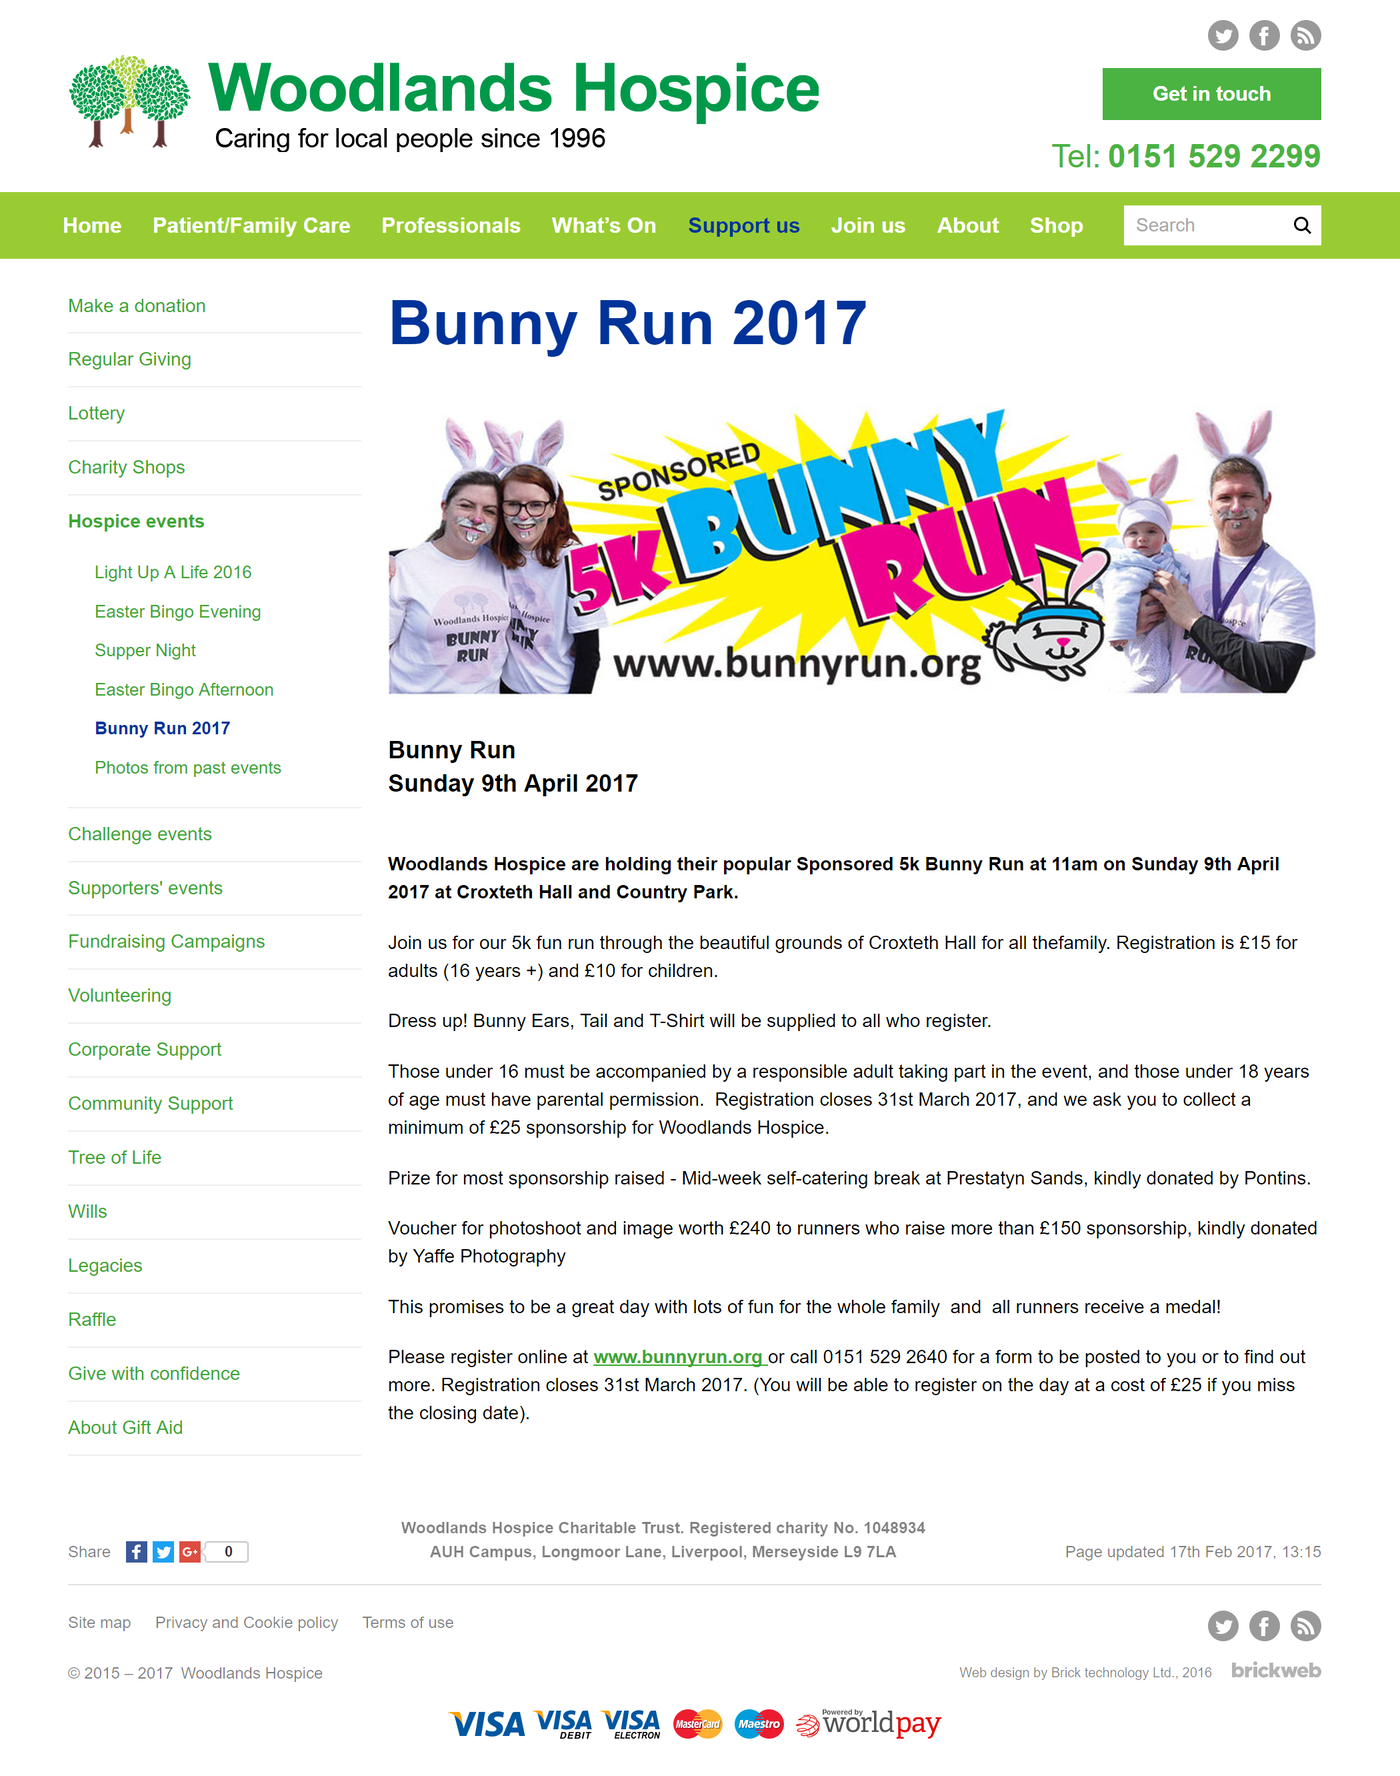 Woodlands Hospice Event - Bunny Run 2017